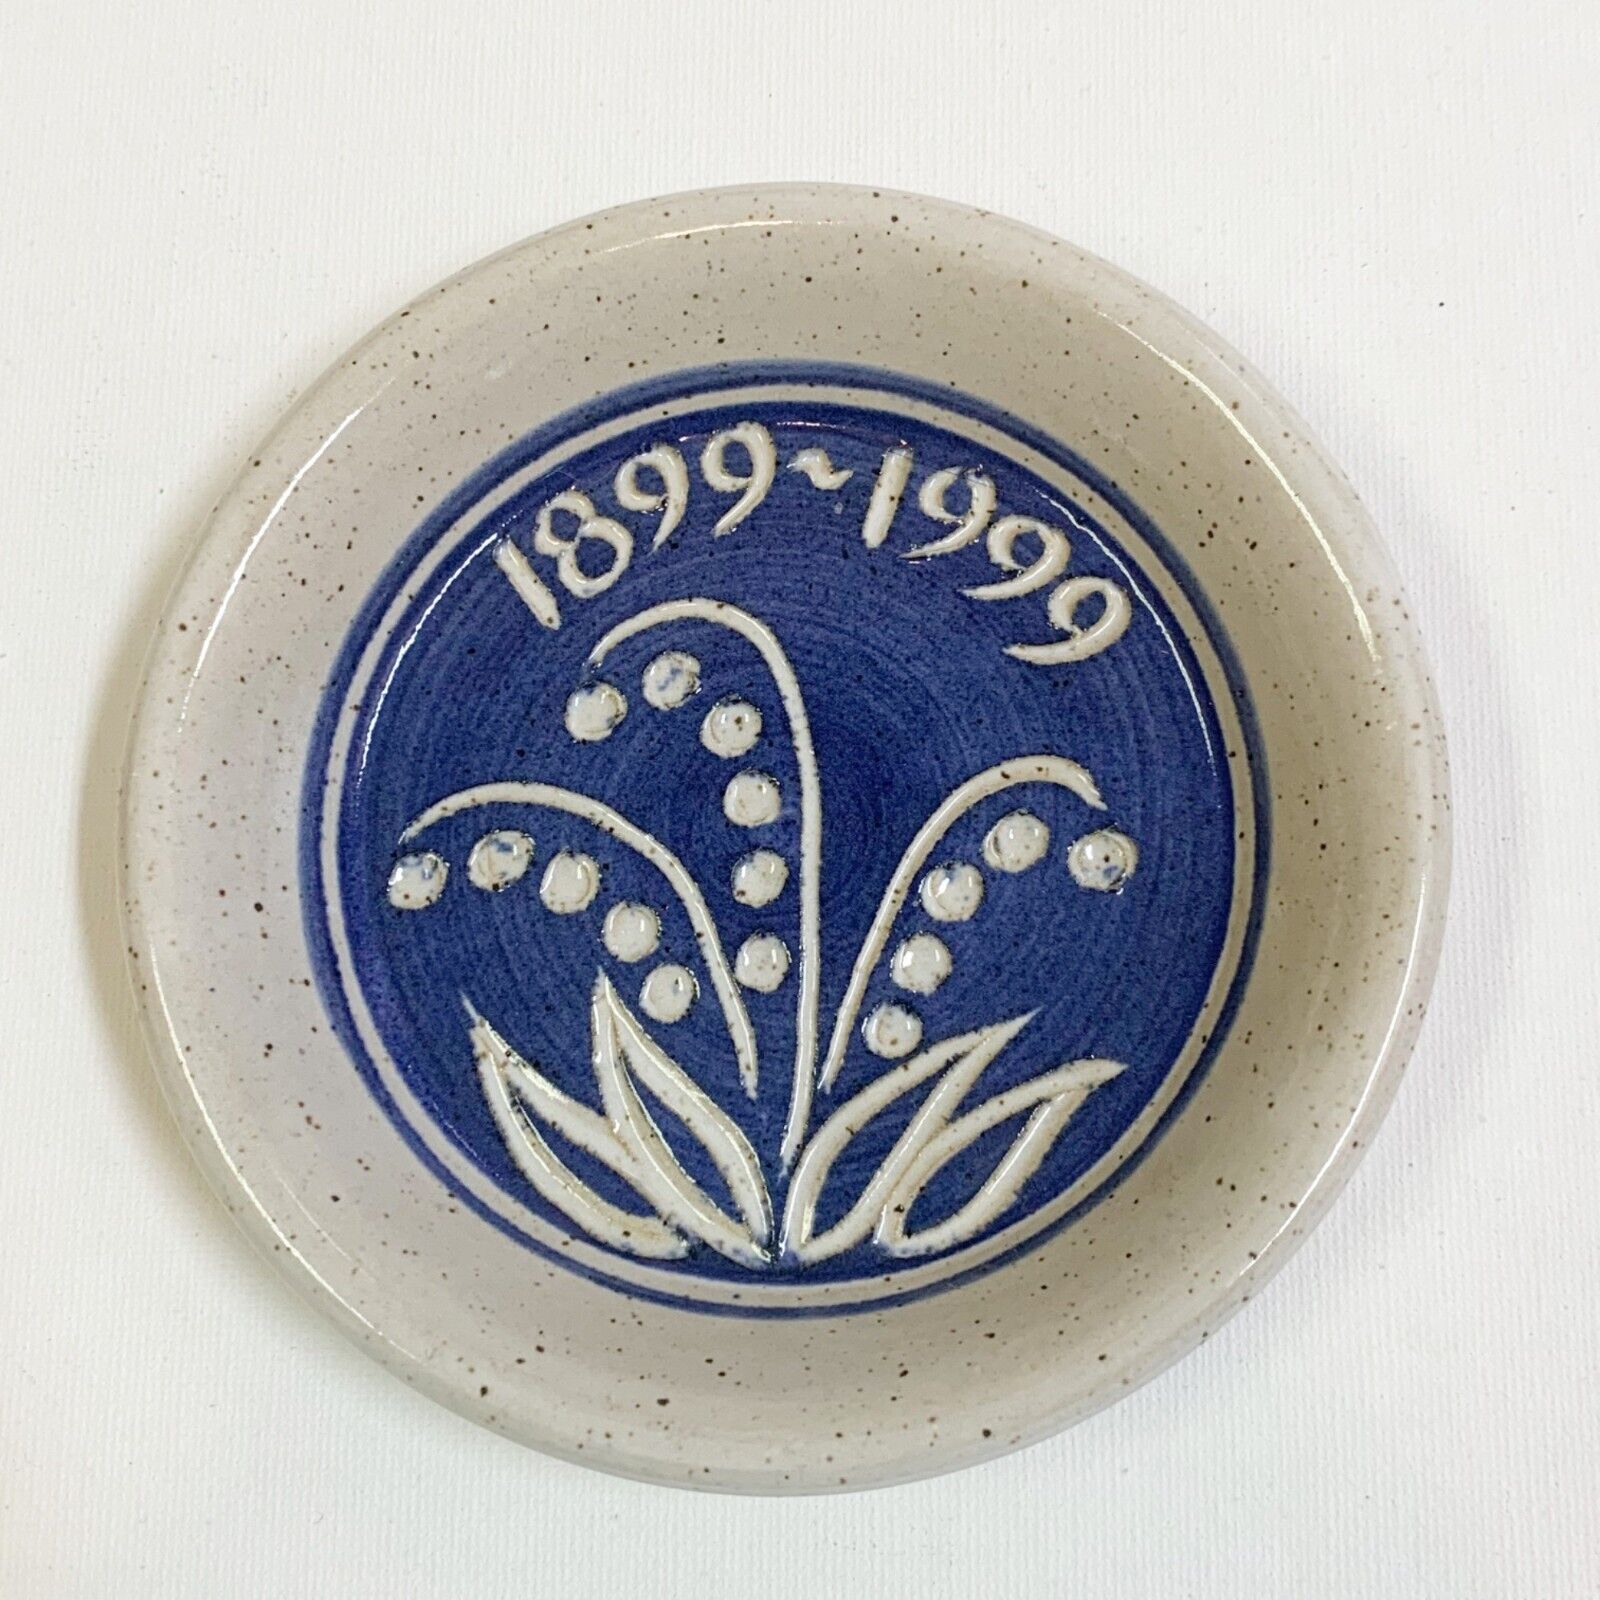 Vintage Gideons Intl Nashville TN 1899-1999 Commemorative Ceramic Dish